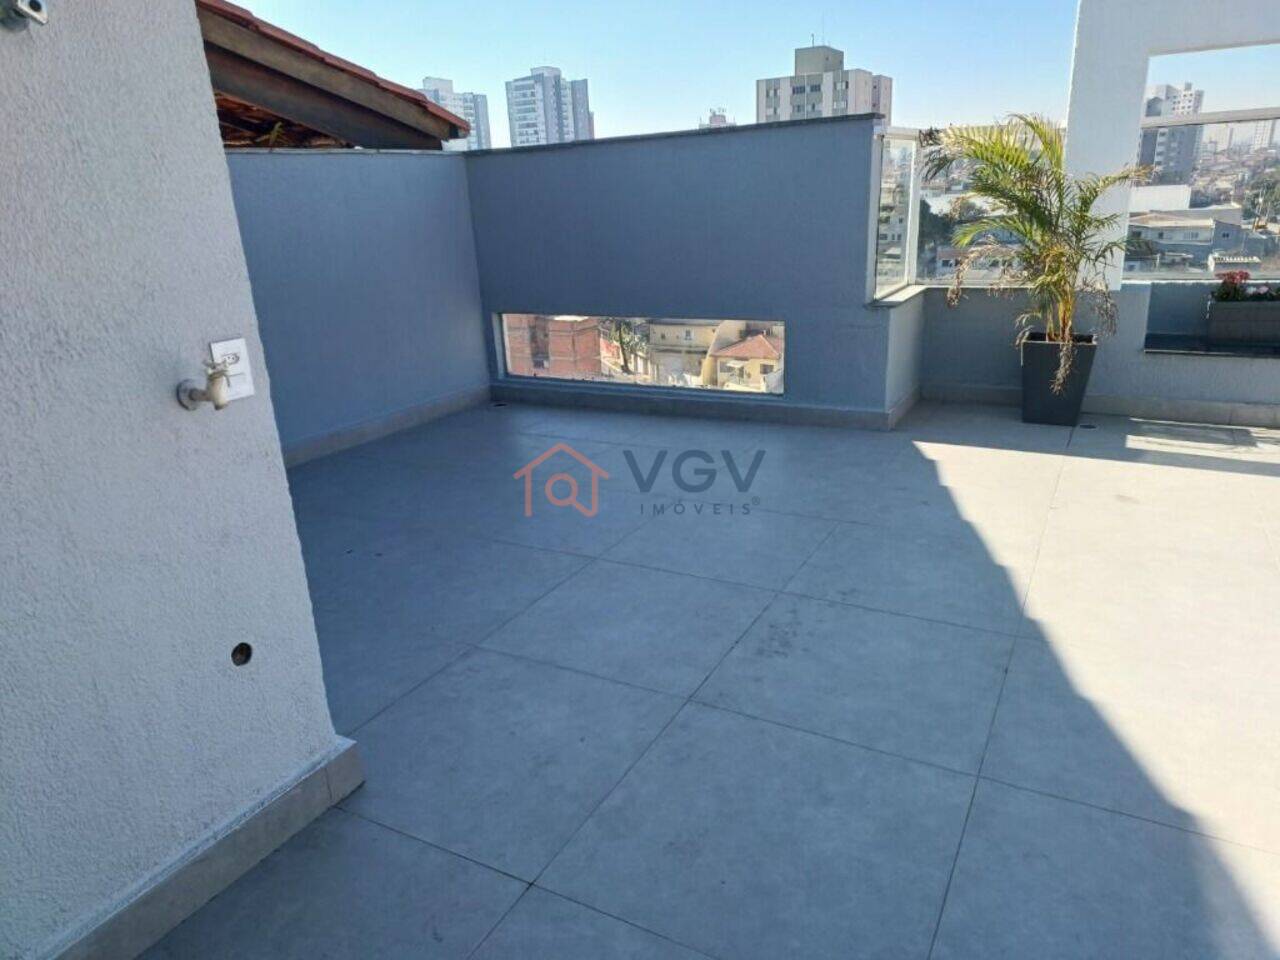 Apartamento duplex Vila Santa Catarina, São Paulo - SP